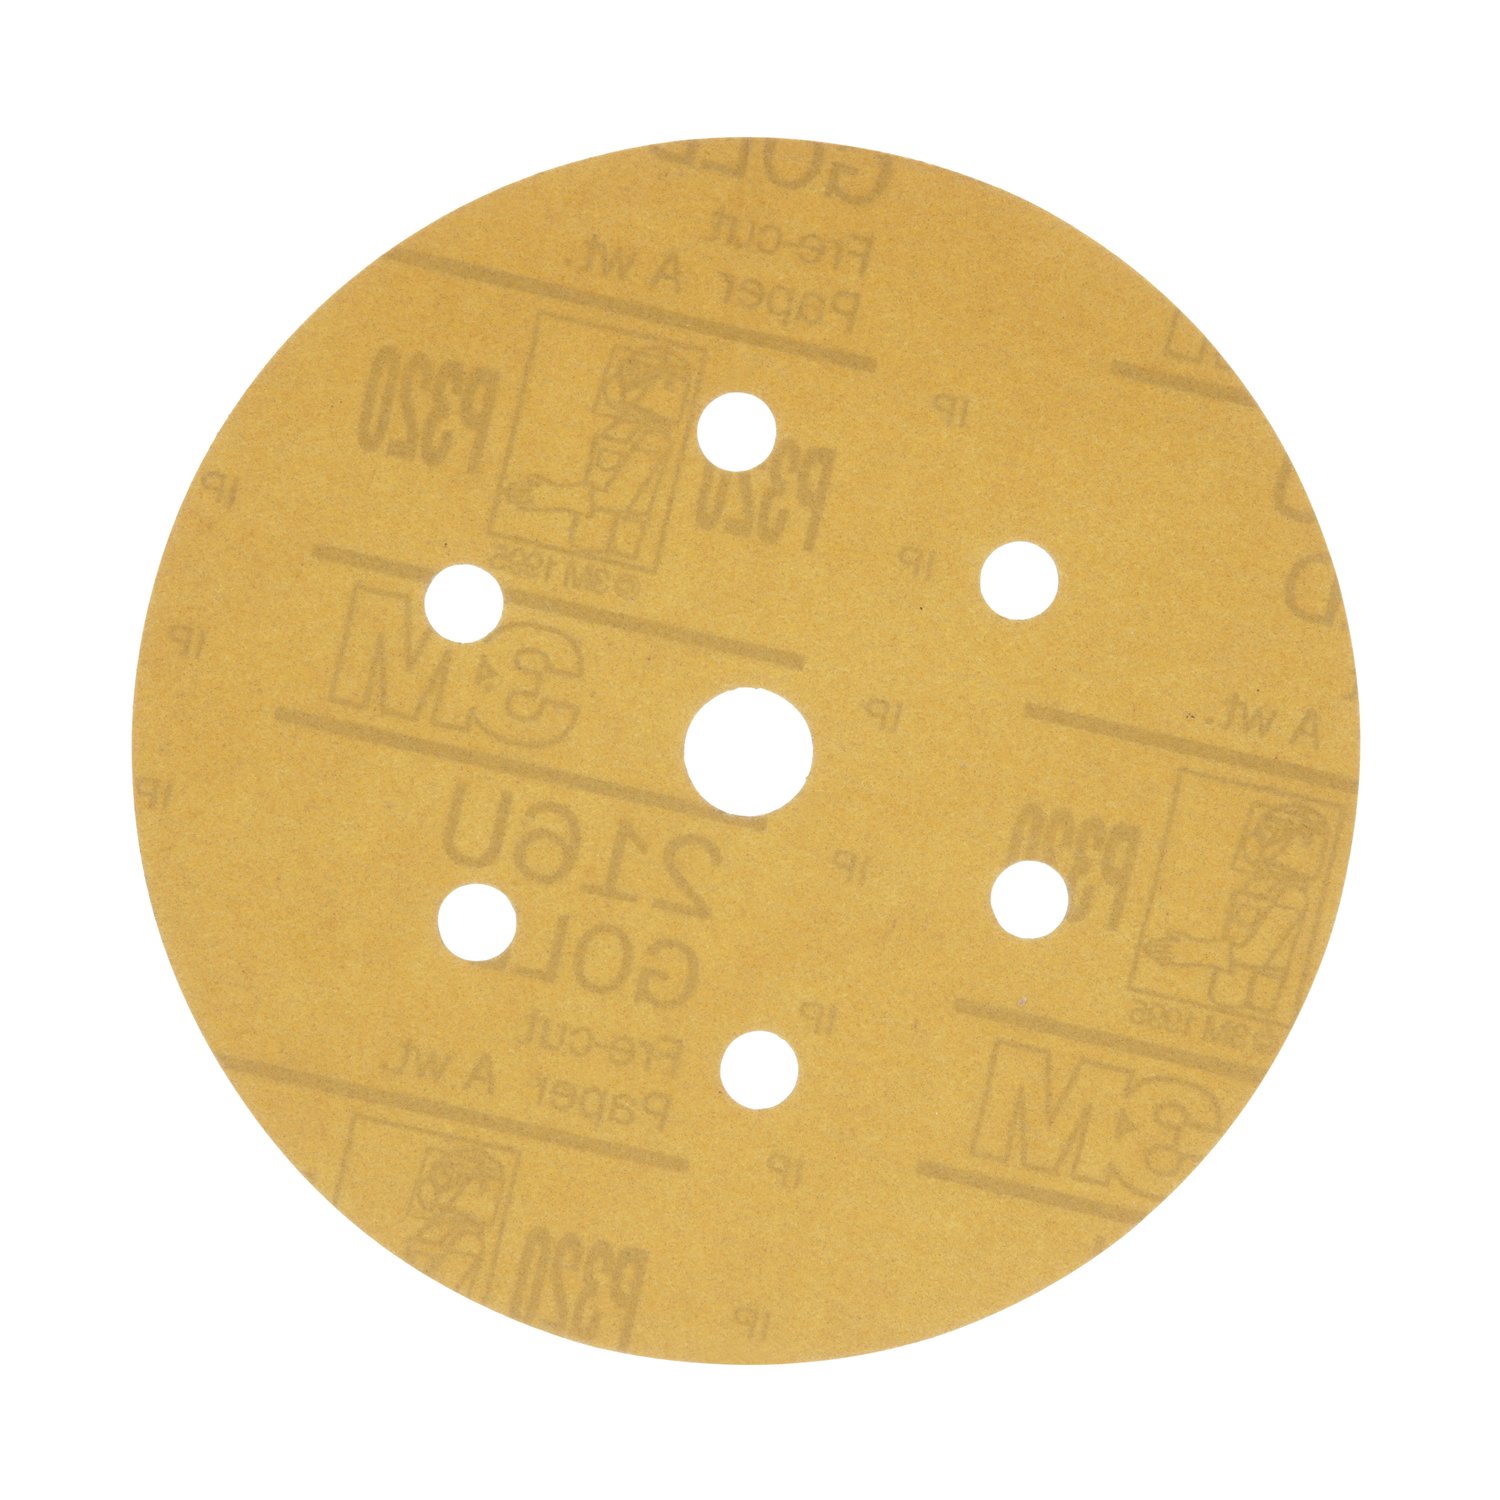 7000119689 - 3M Hookit Gold Disc Dust Free 216U 01075, 6 in, P320, 100 Discs/Carton, 4 Cartons/Case